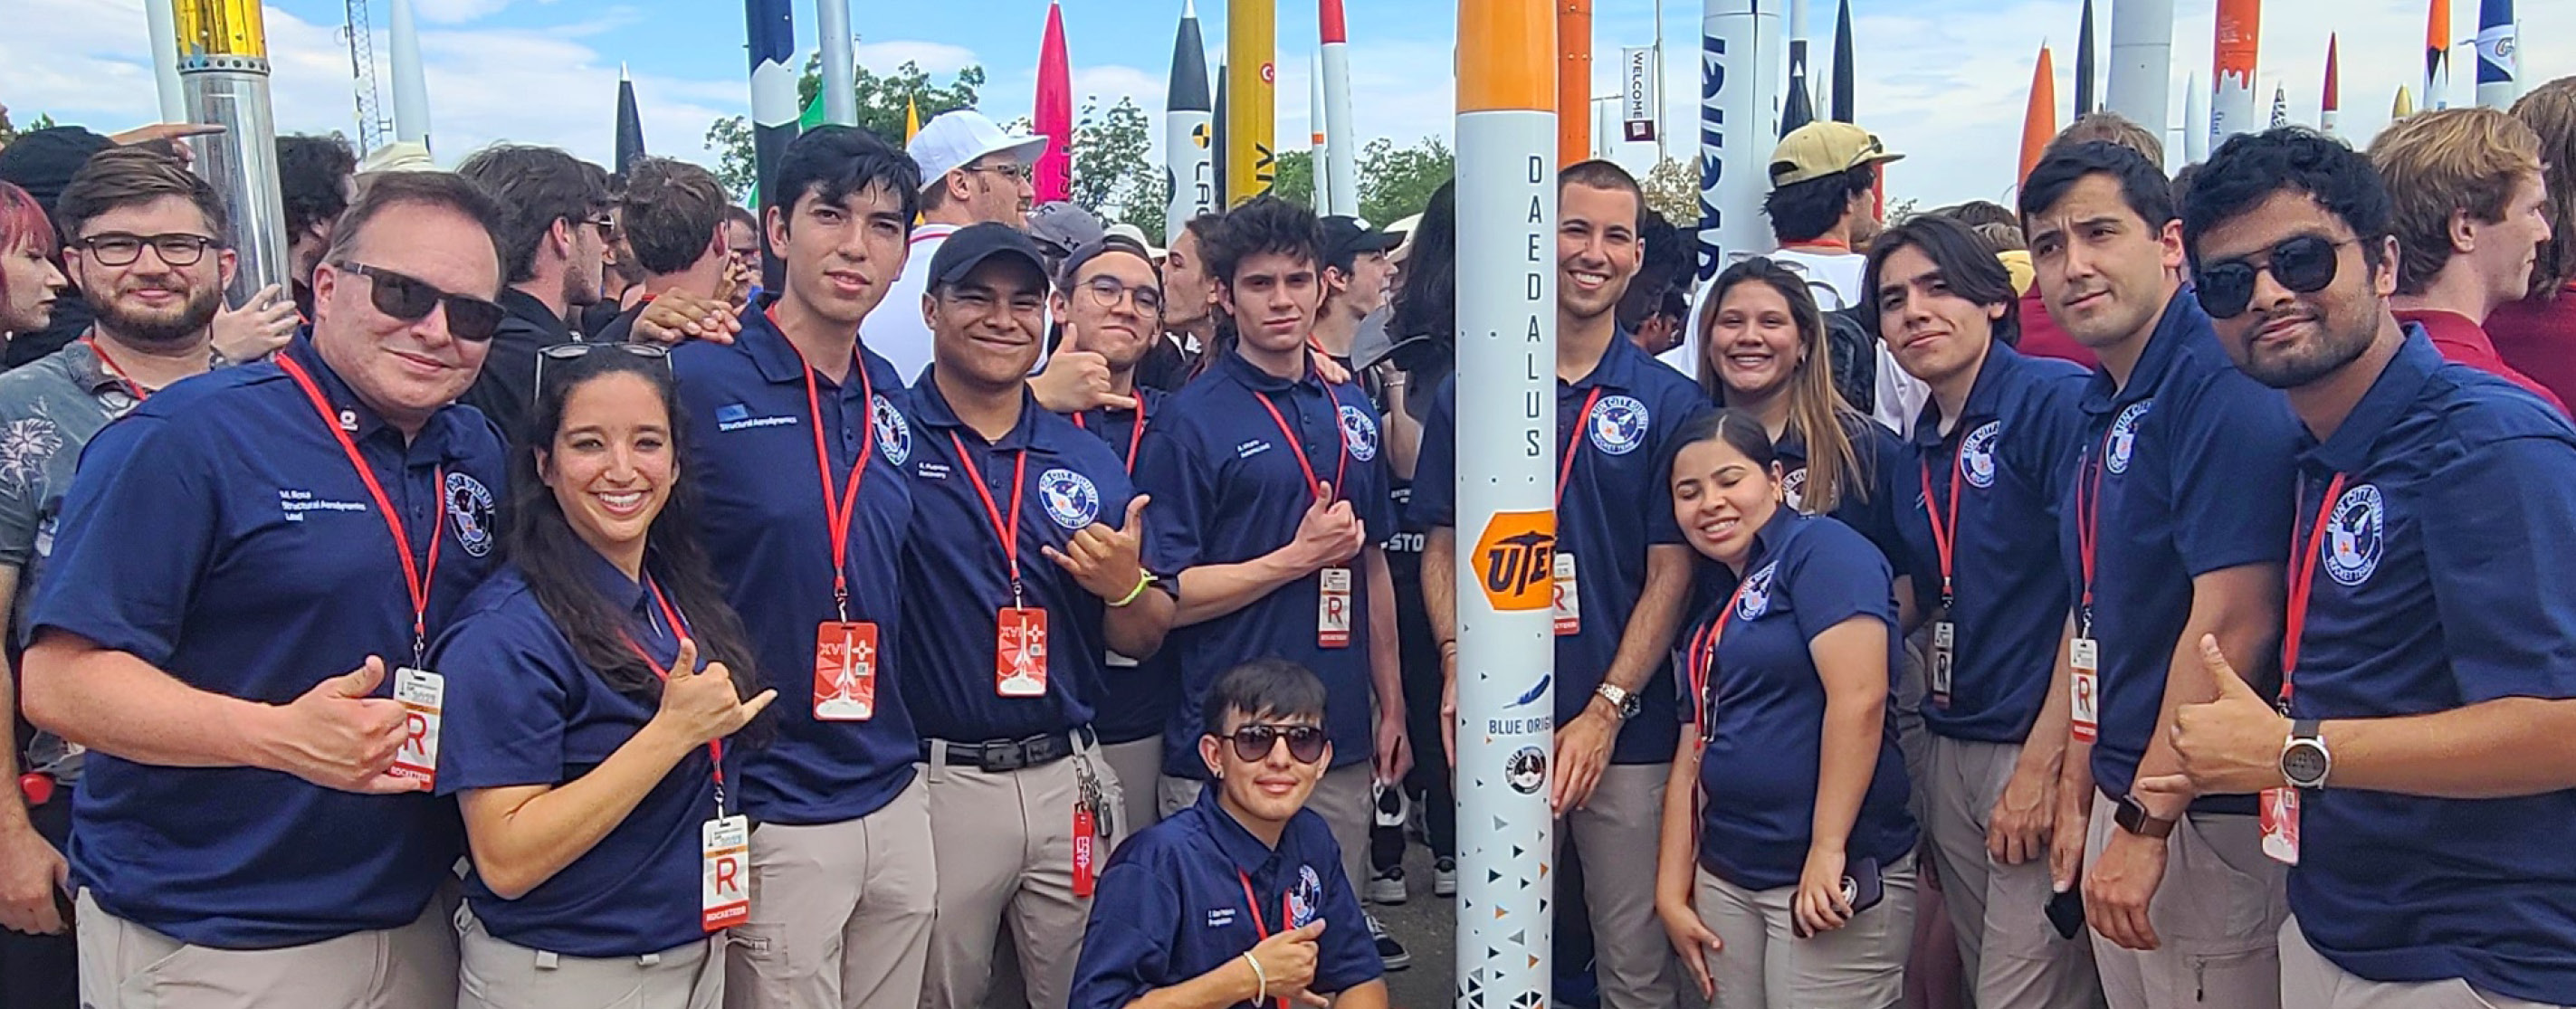 UTEP Rocket Team Competes at Spaceport America Cup 